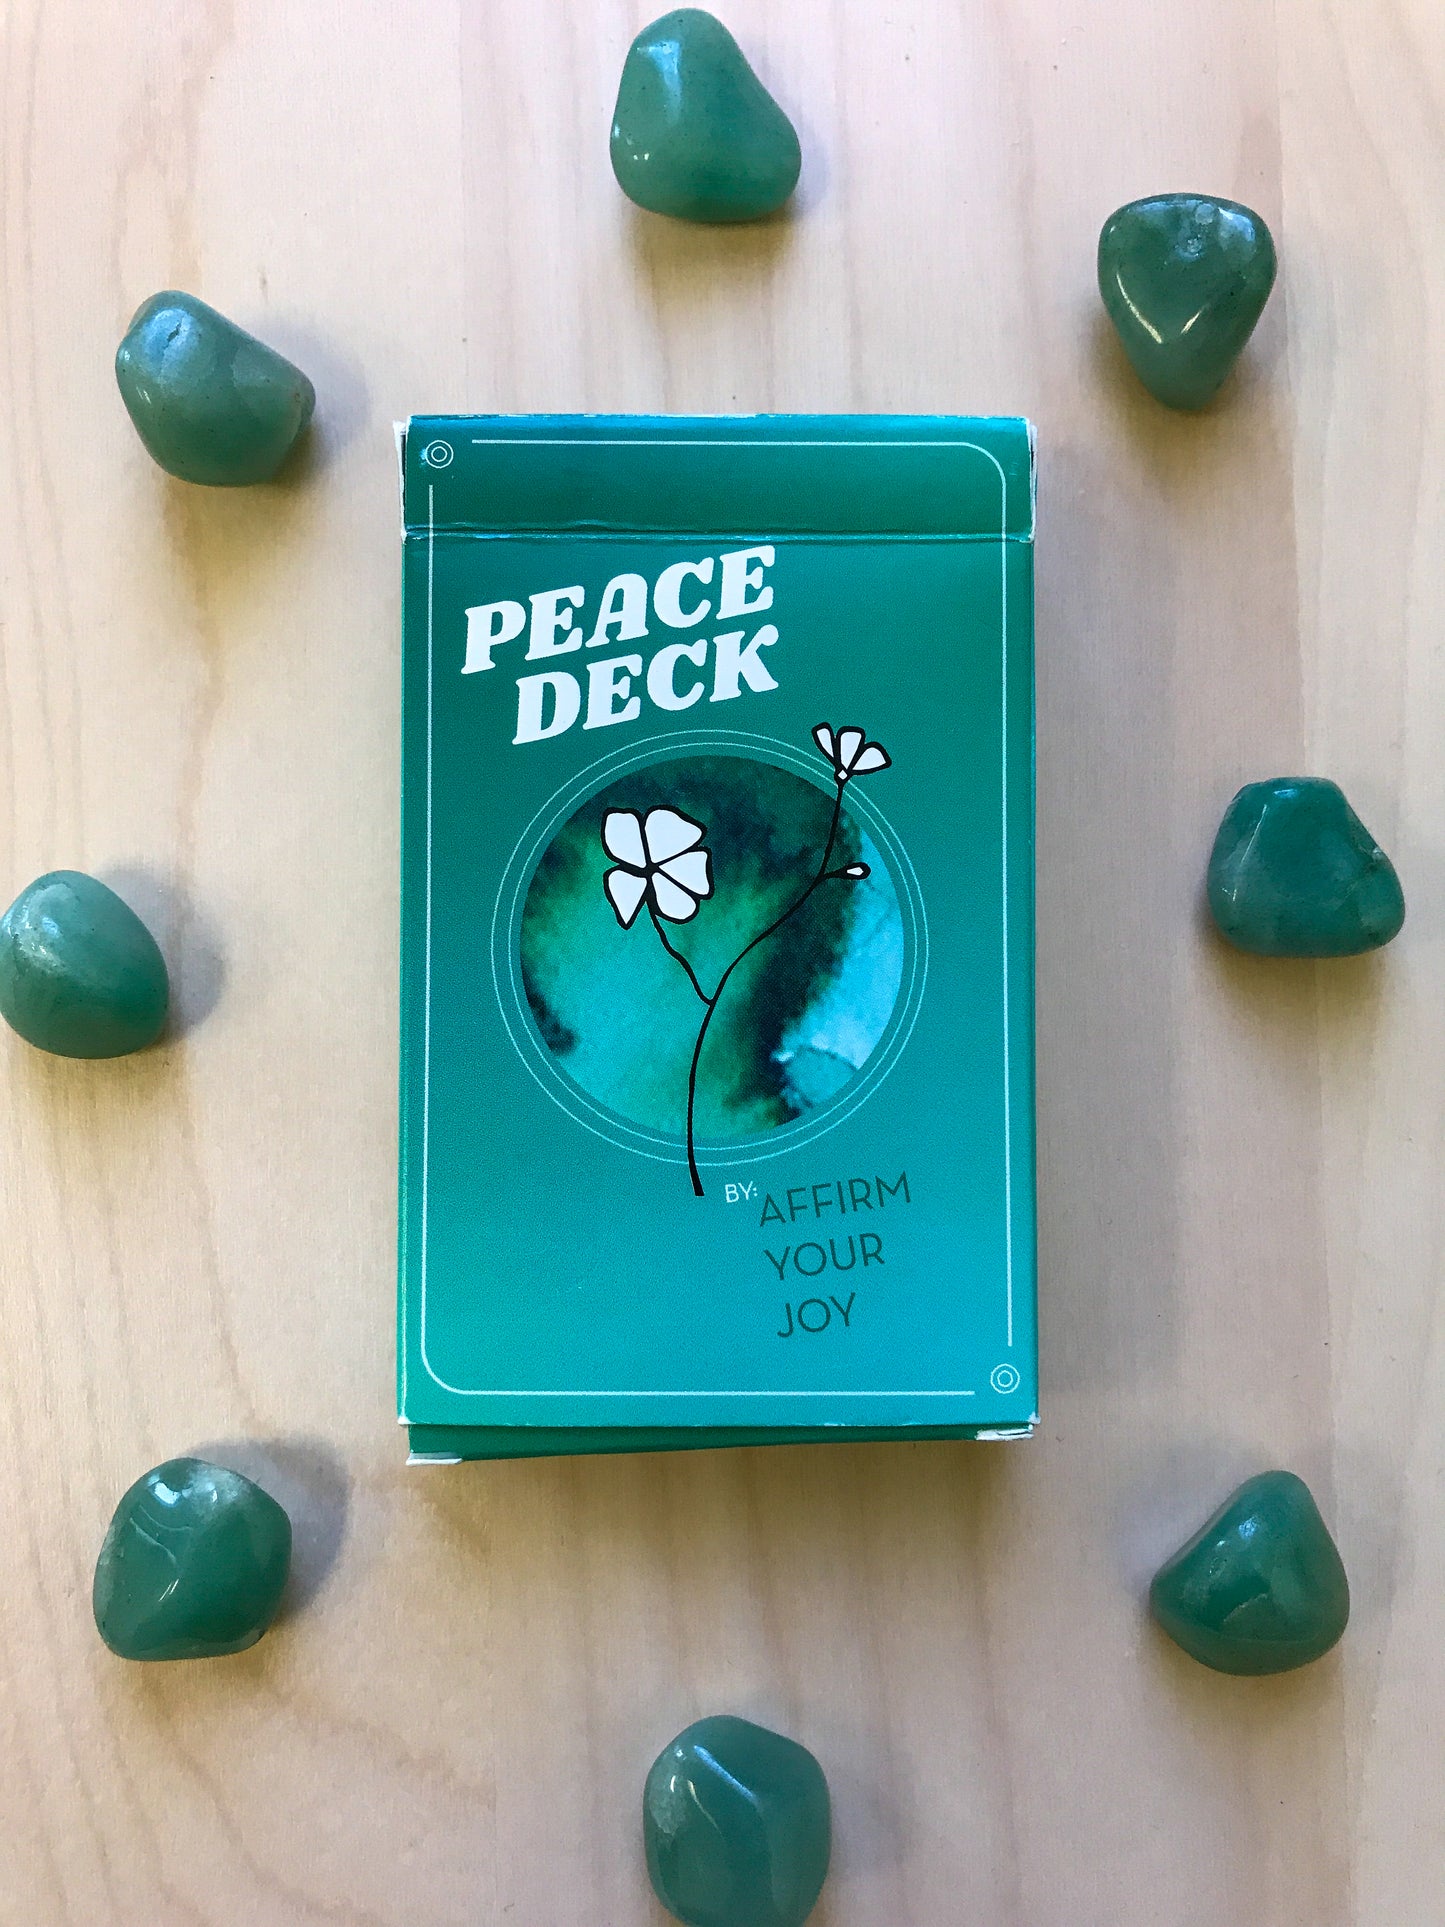 Peace Deck with Green Aventurine stones around it